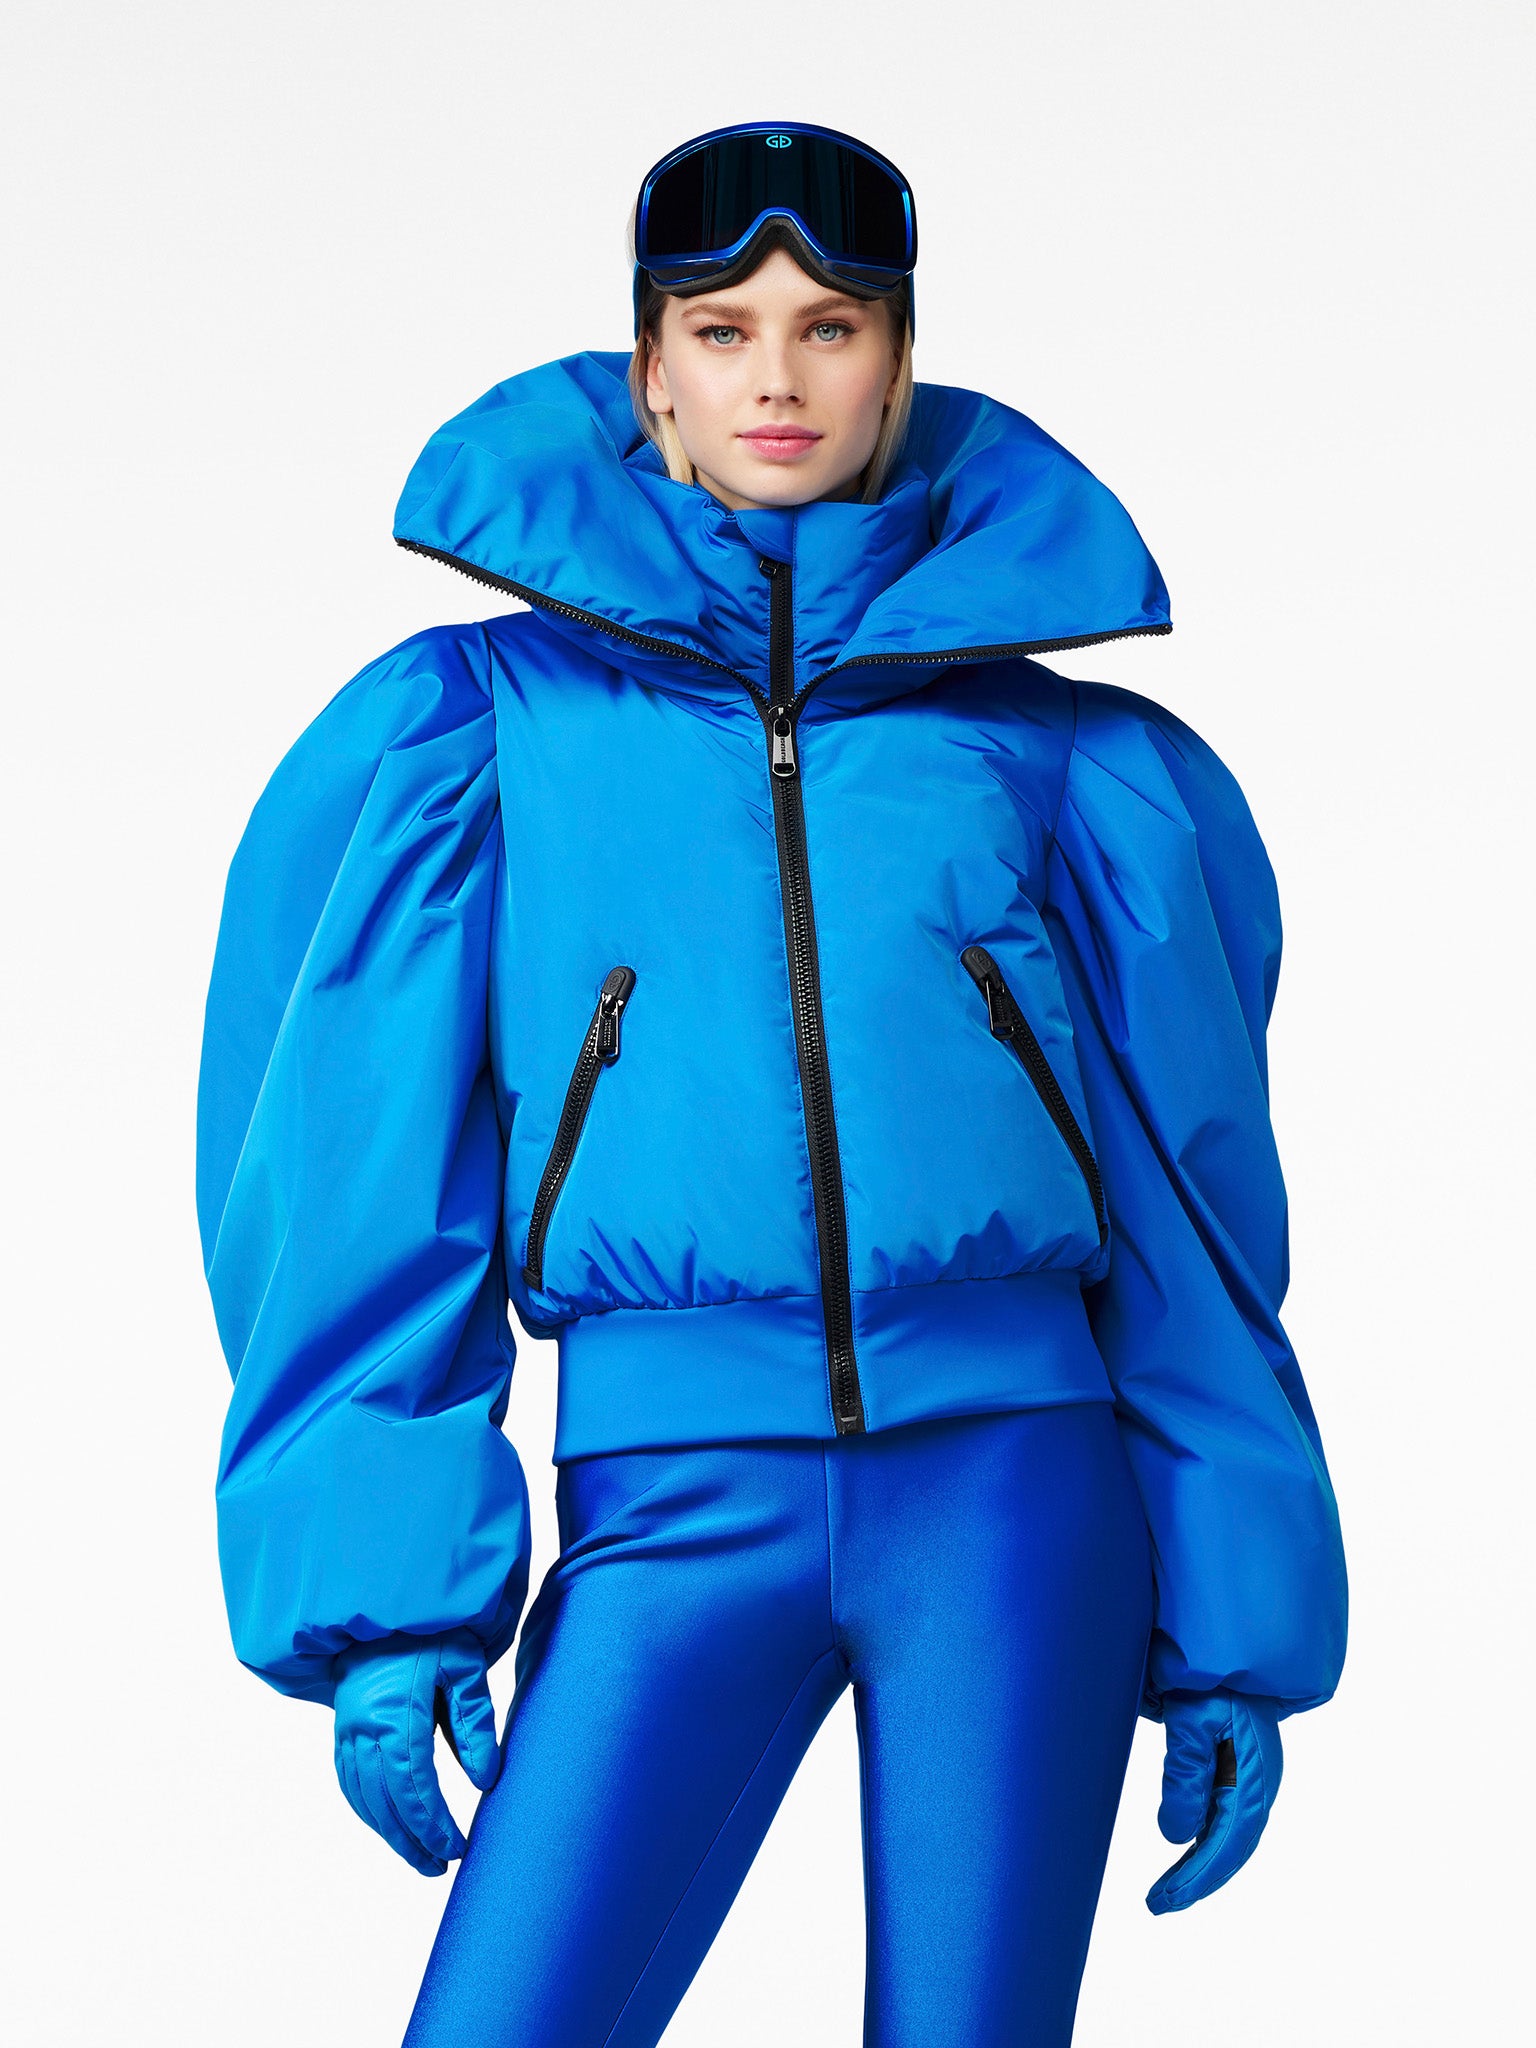 goldbergh ski jacket